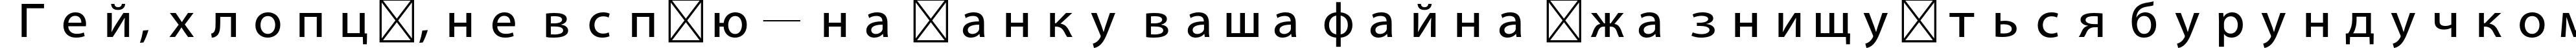 Пример написания шрифтом Adobe Fan Heiti Std B текста на украинском